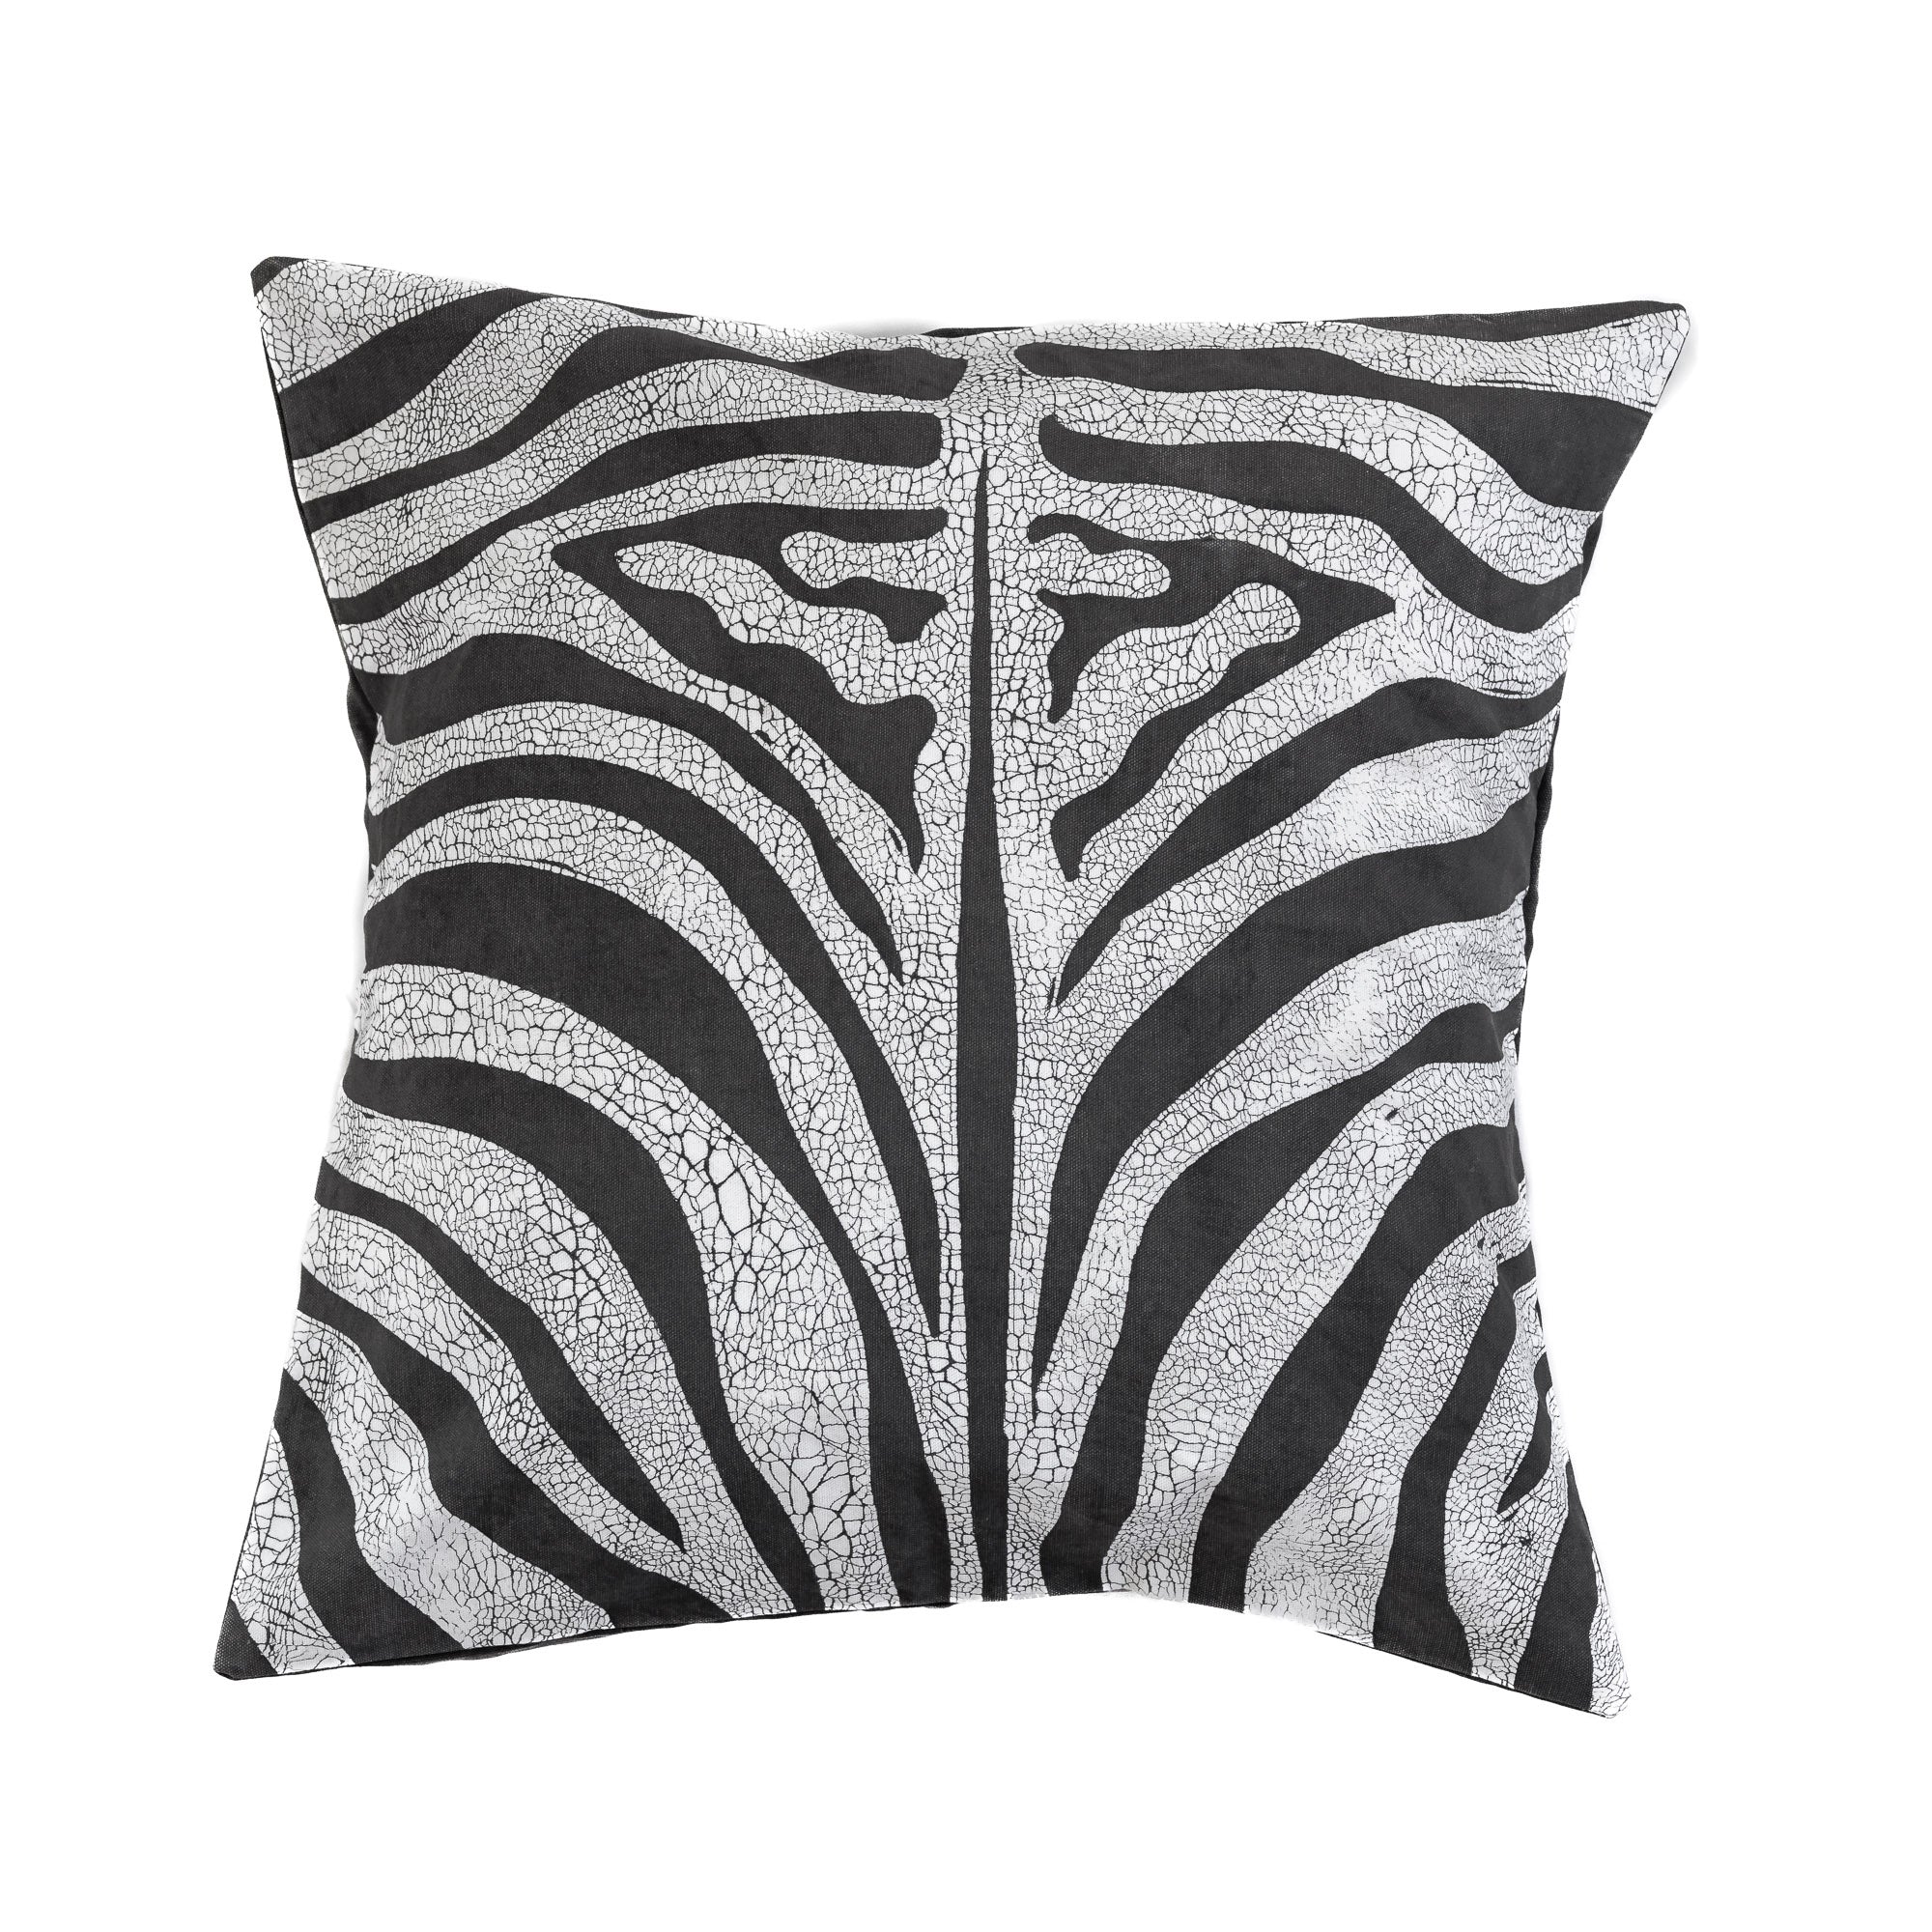 Mkupo Zebra Cushion Cover